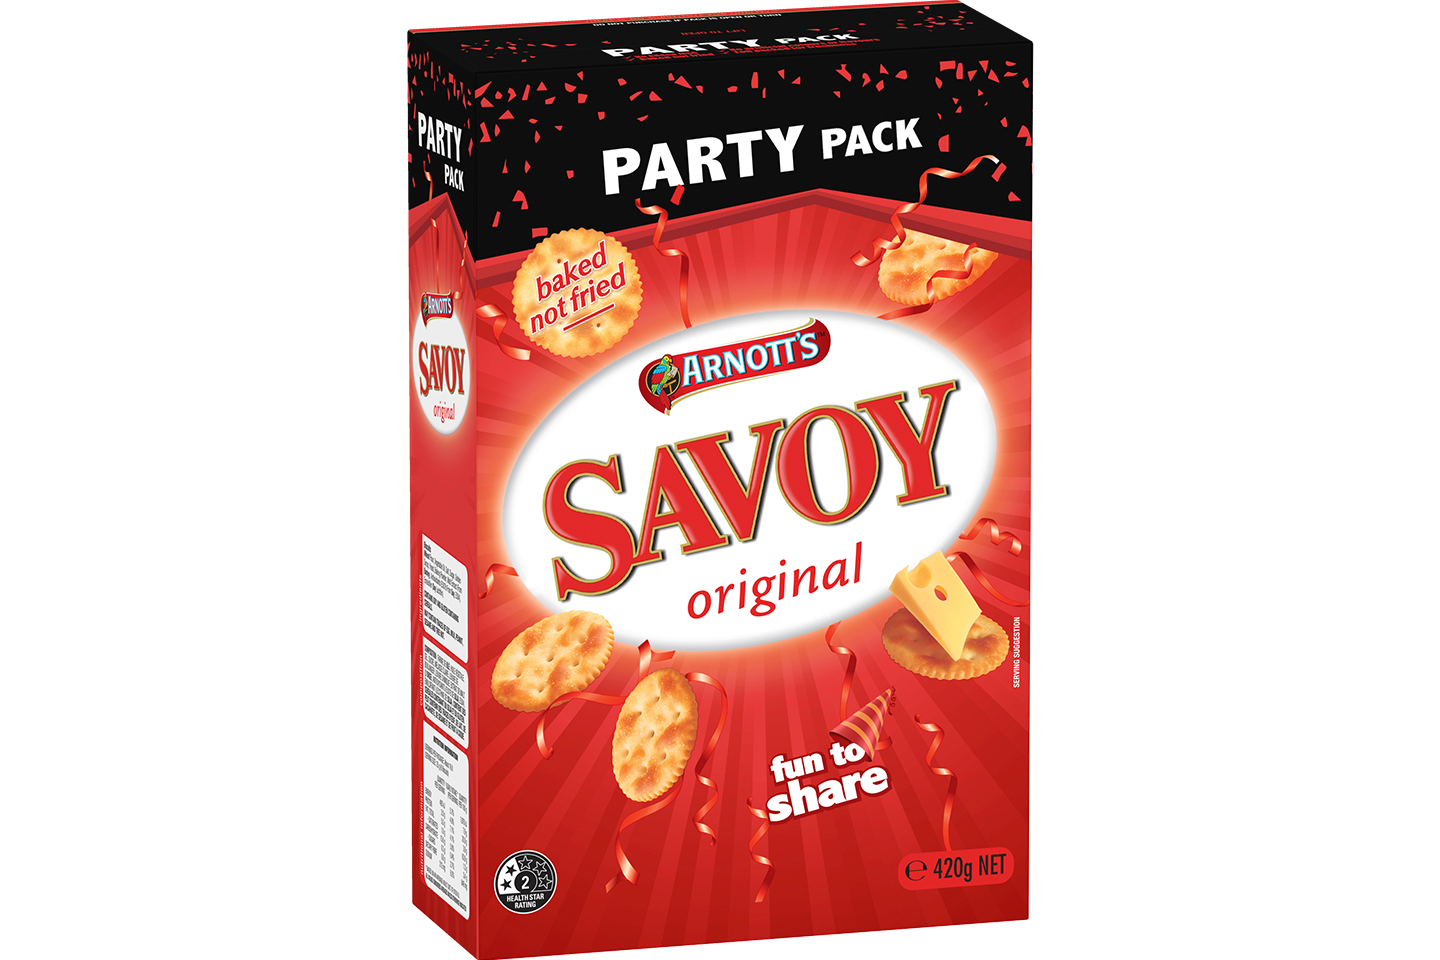 Savoy Original Party Pack